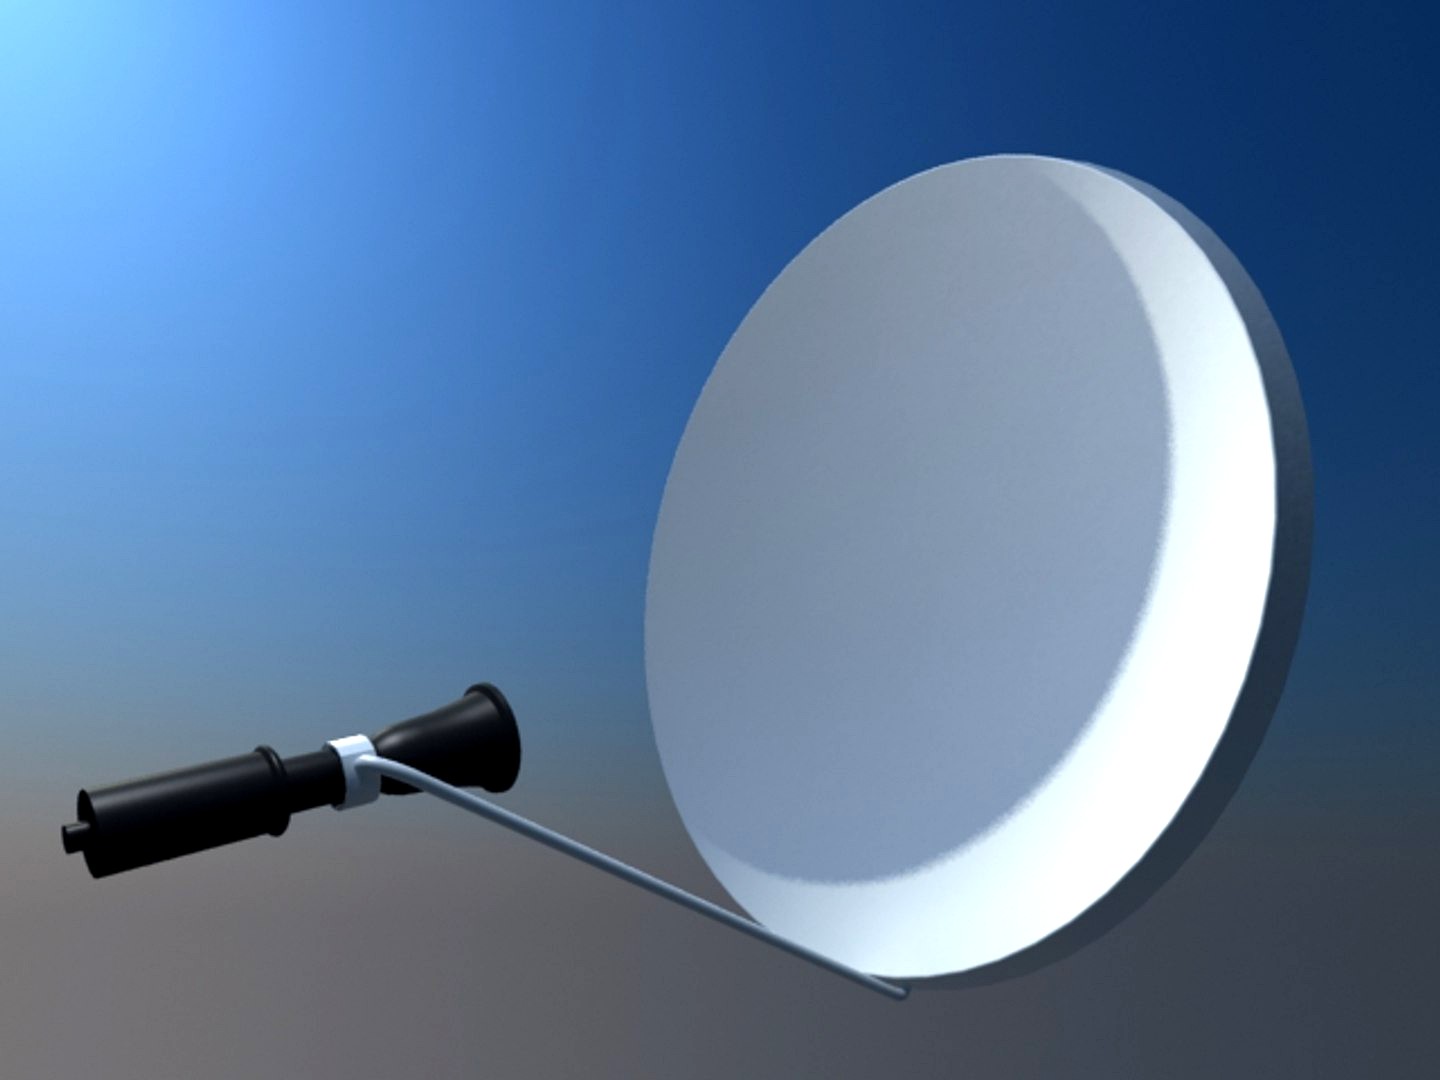 Satellite dish, Parabolic antenna